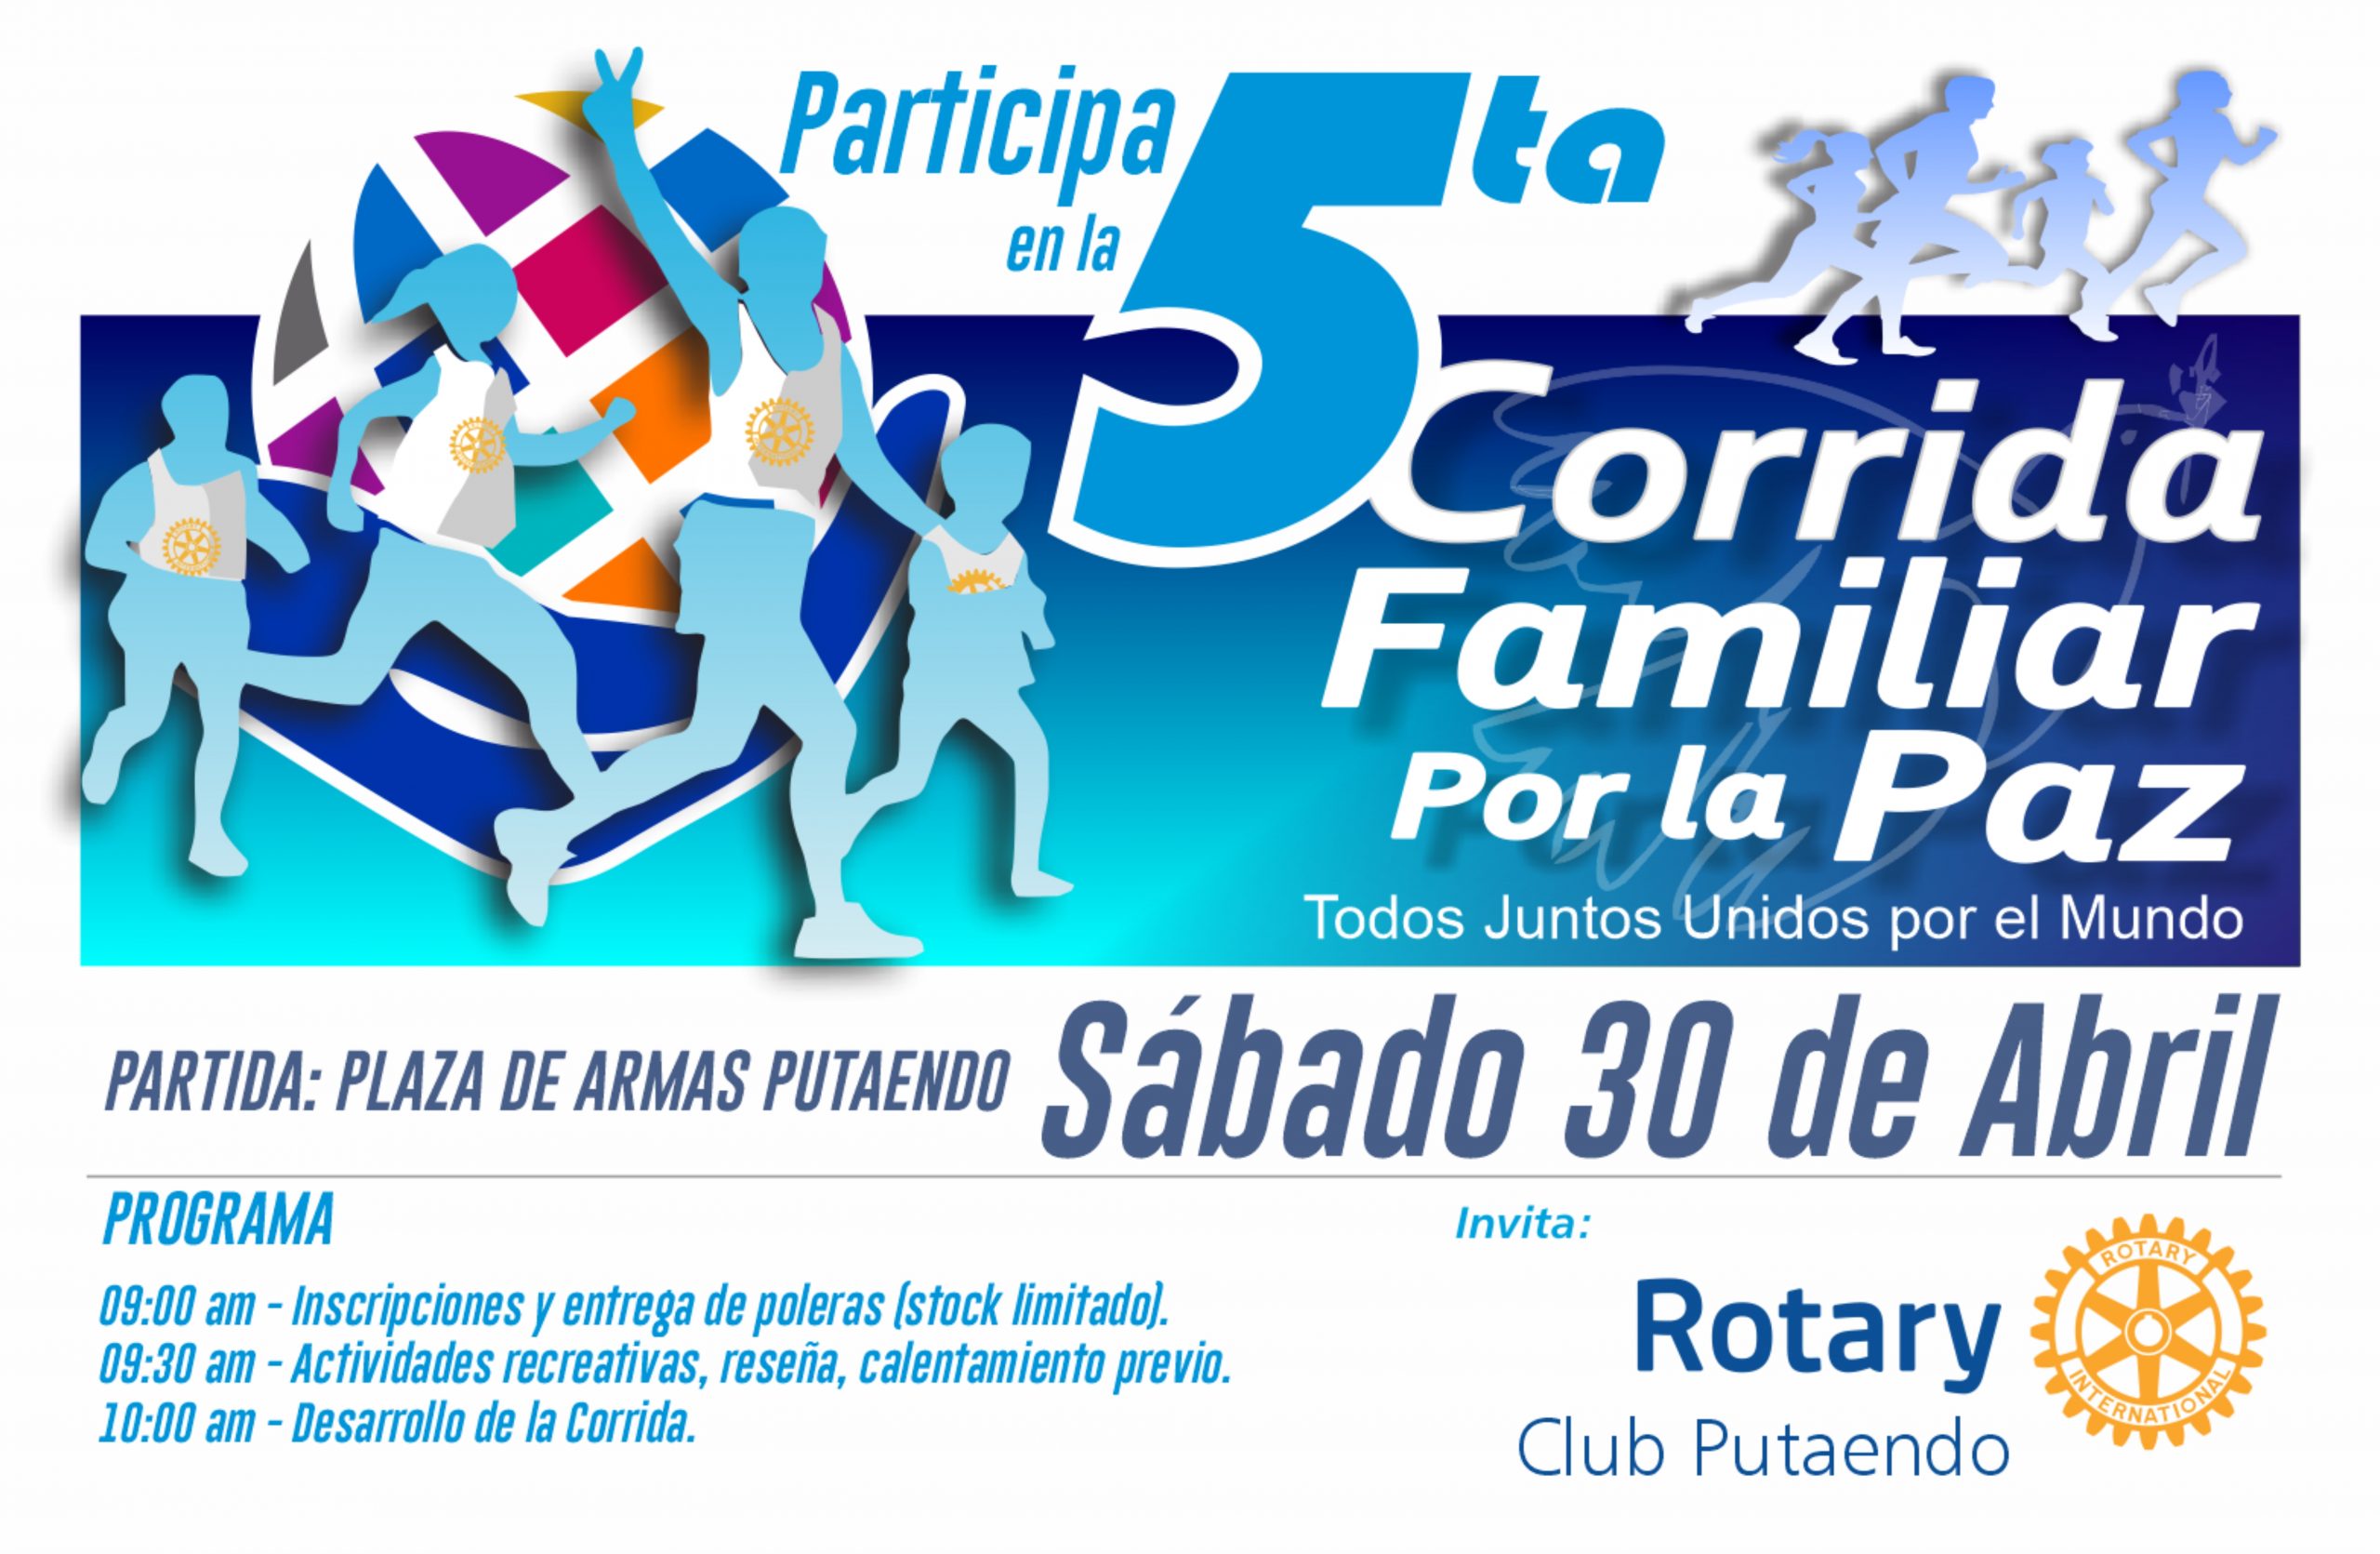 PUTAENDO:  Rotary Club Putaendo invita a participar de la 5º Corrida Familiar por la Paz  